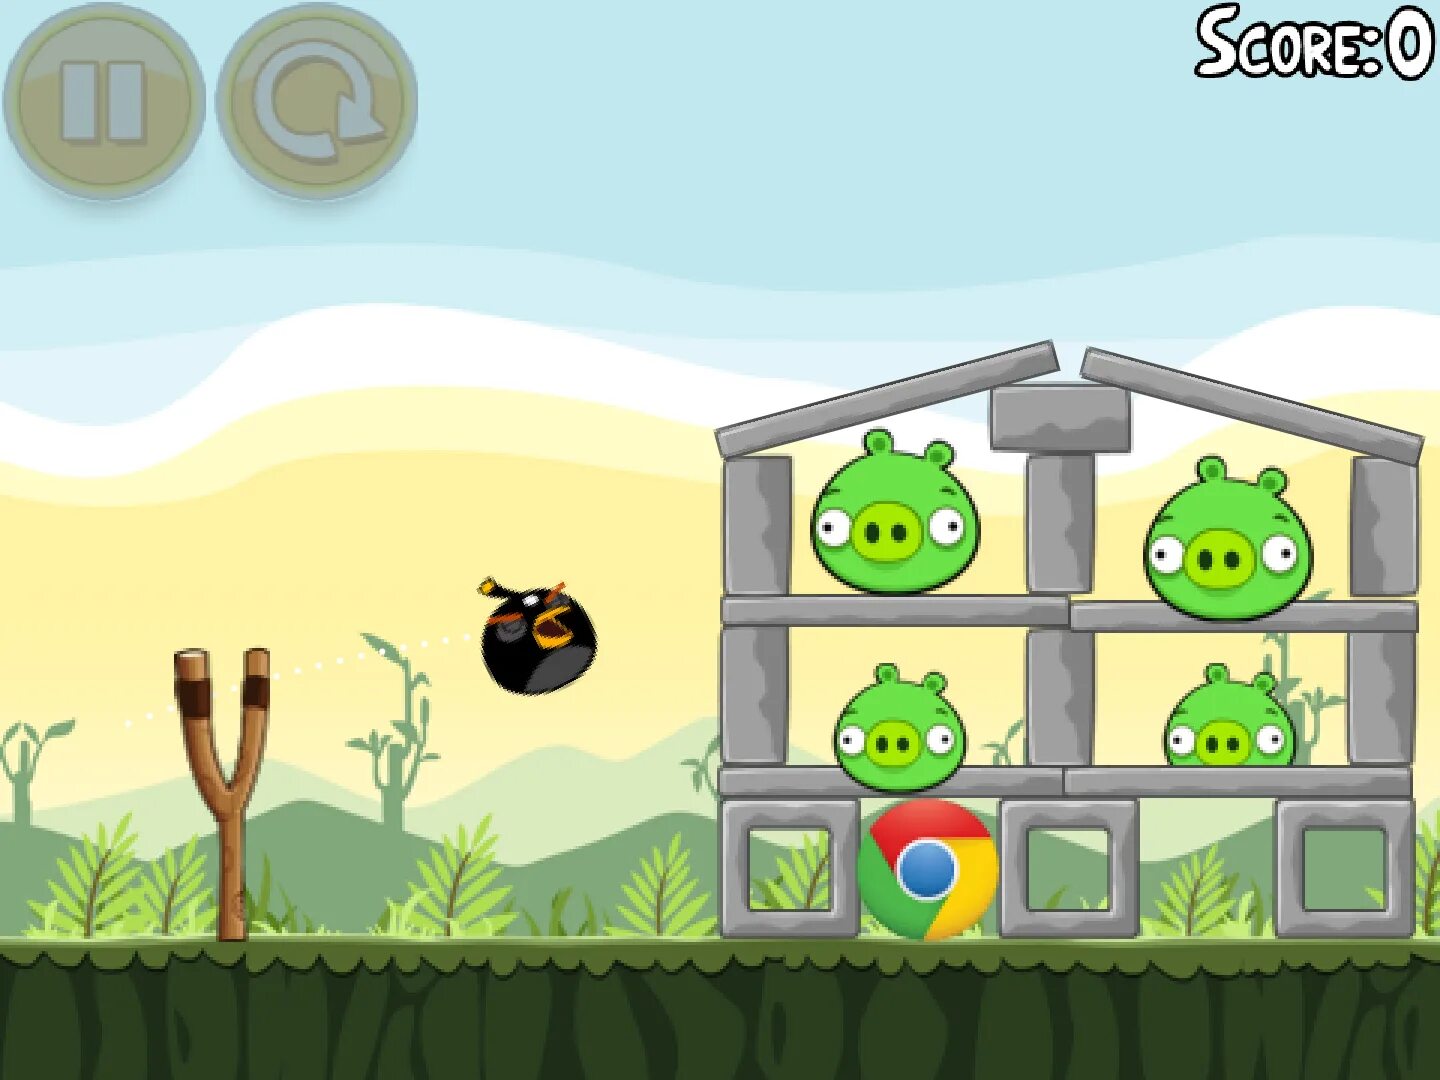 Birds chrome. Angry Birds Chrome. Angry Birds Chrome Beta. Angry Birds Chrome играть. Angry Birds 2.